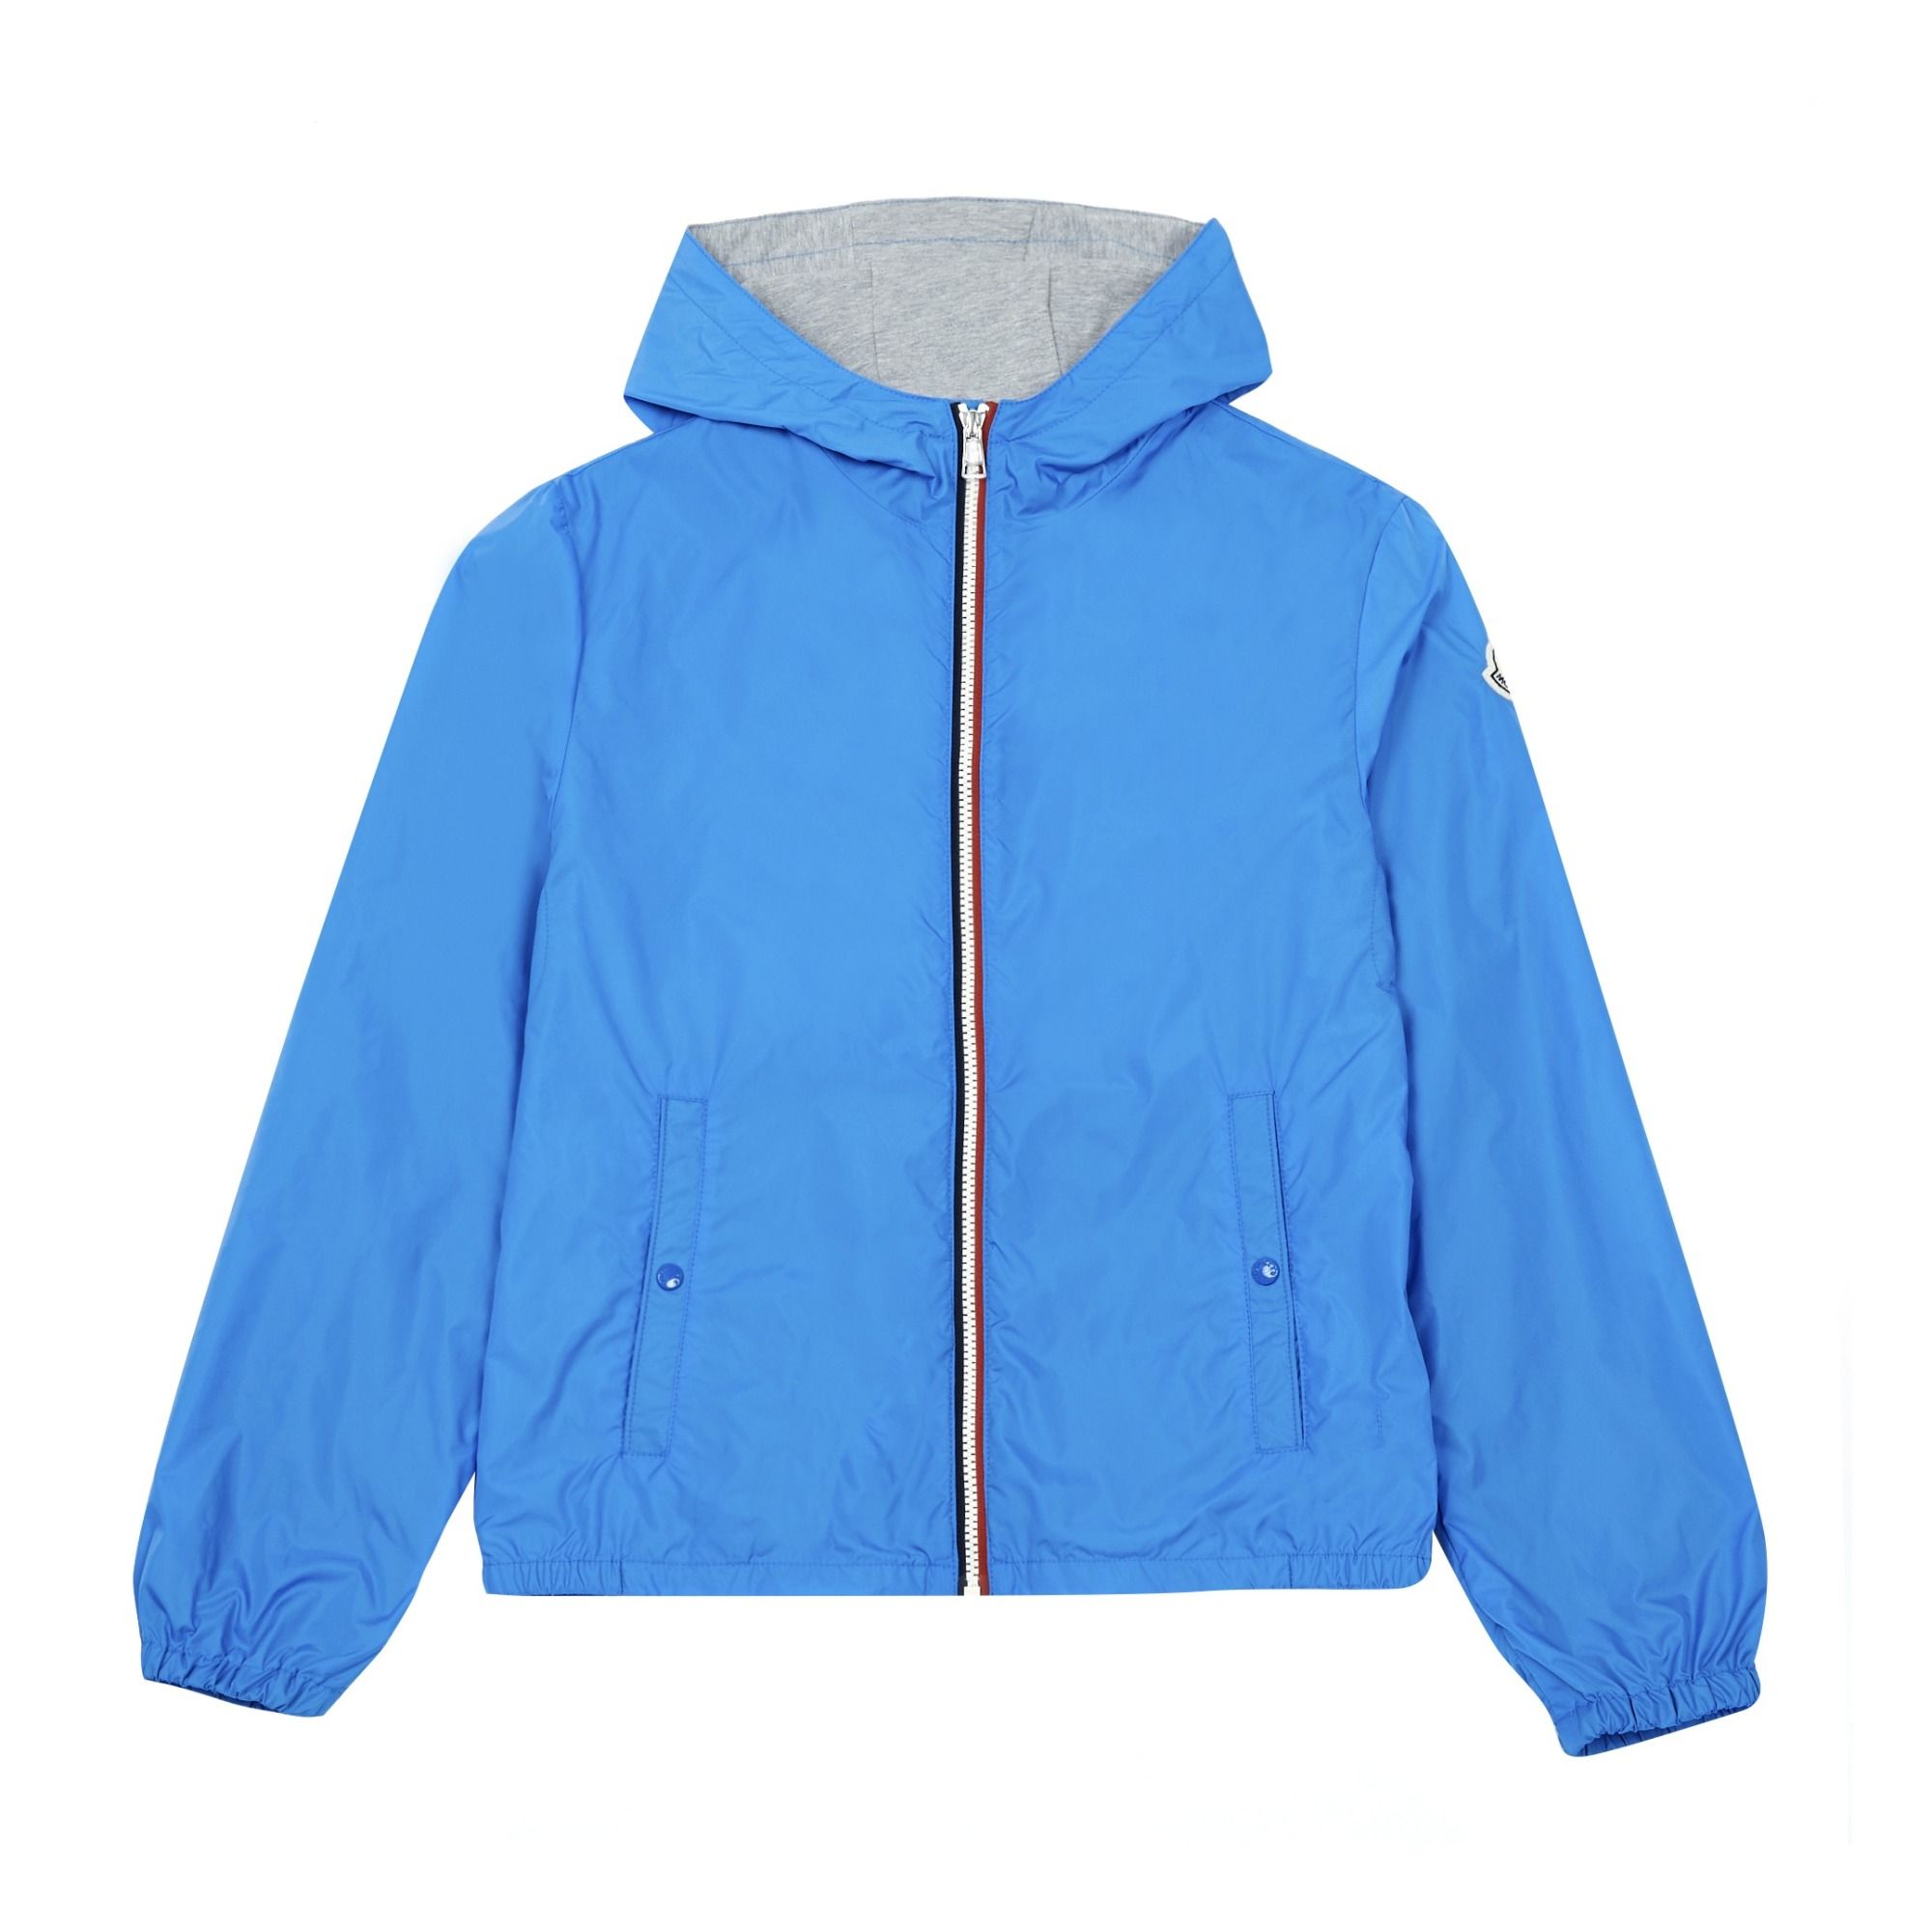 Moncler - New Urville Jacket - Blue | Smallable